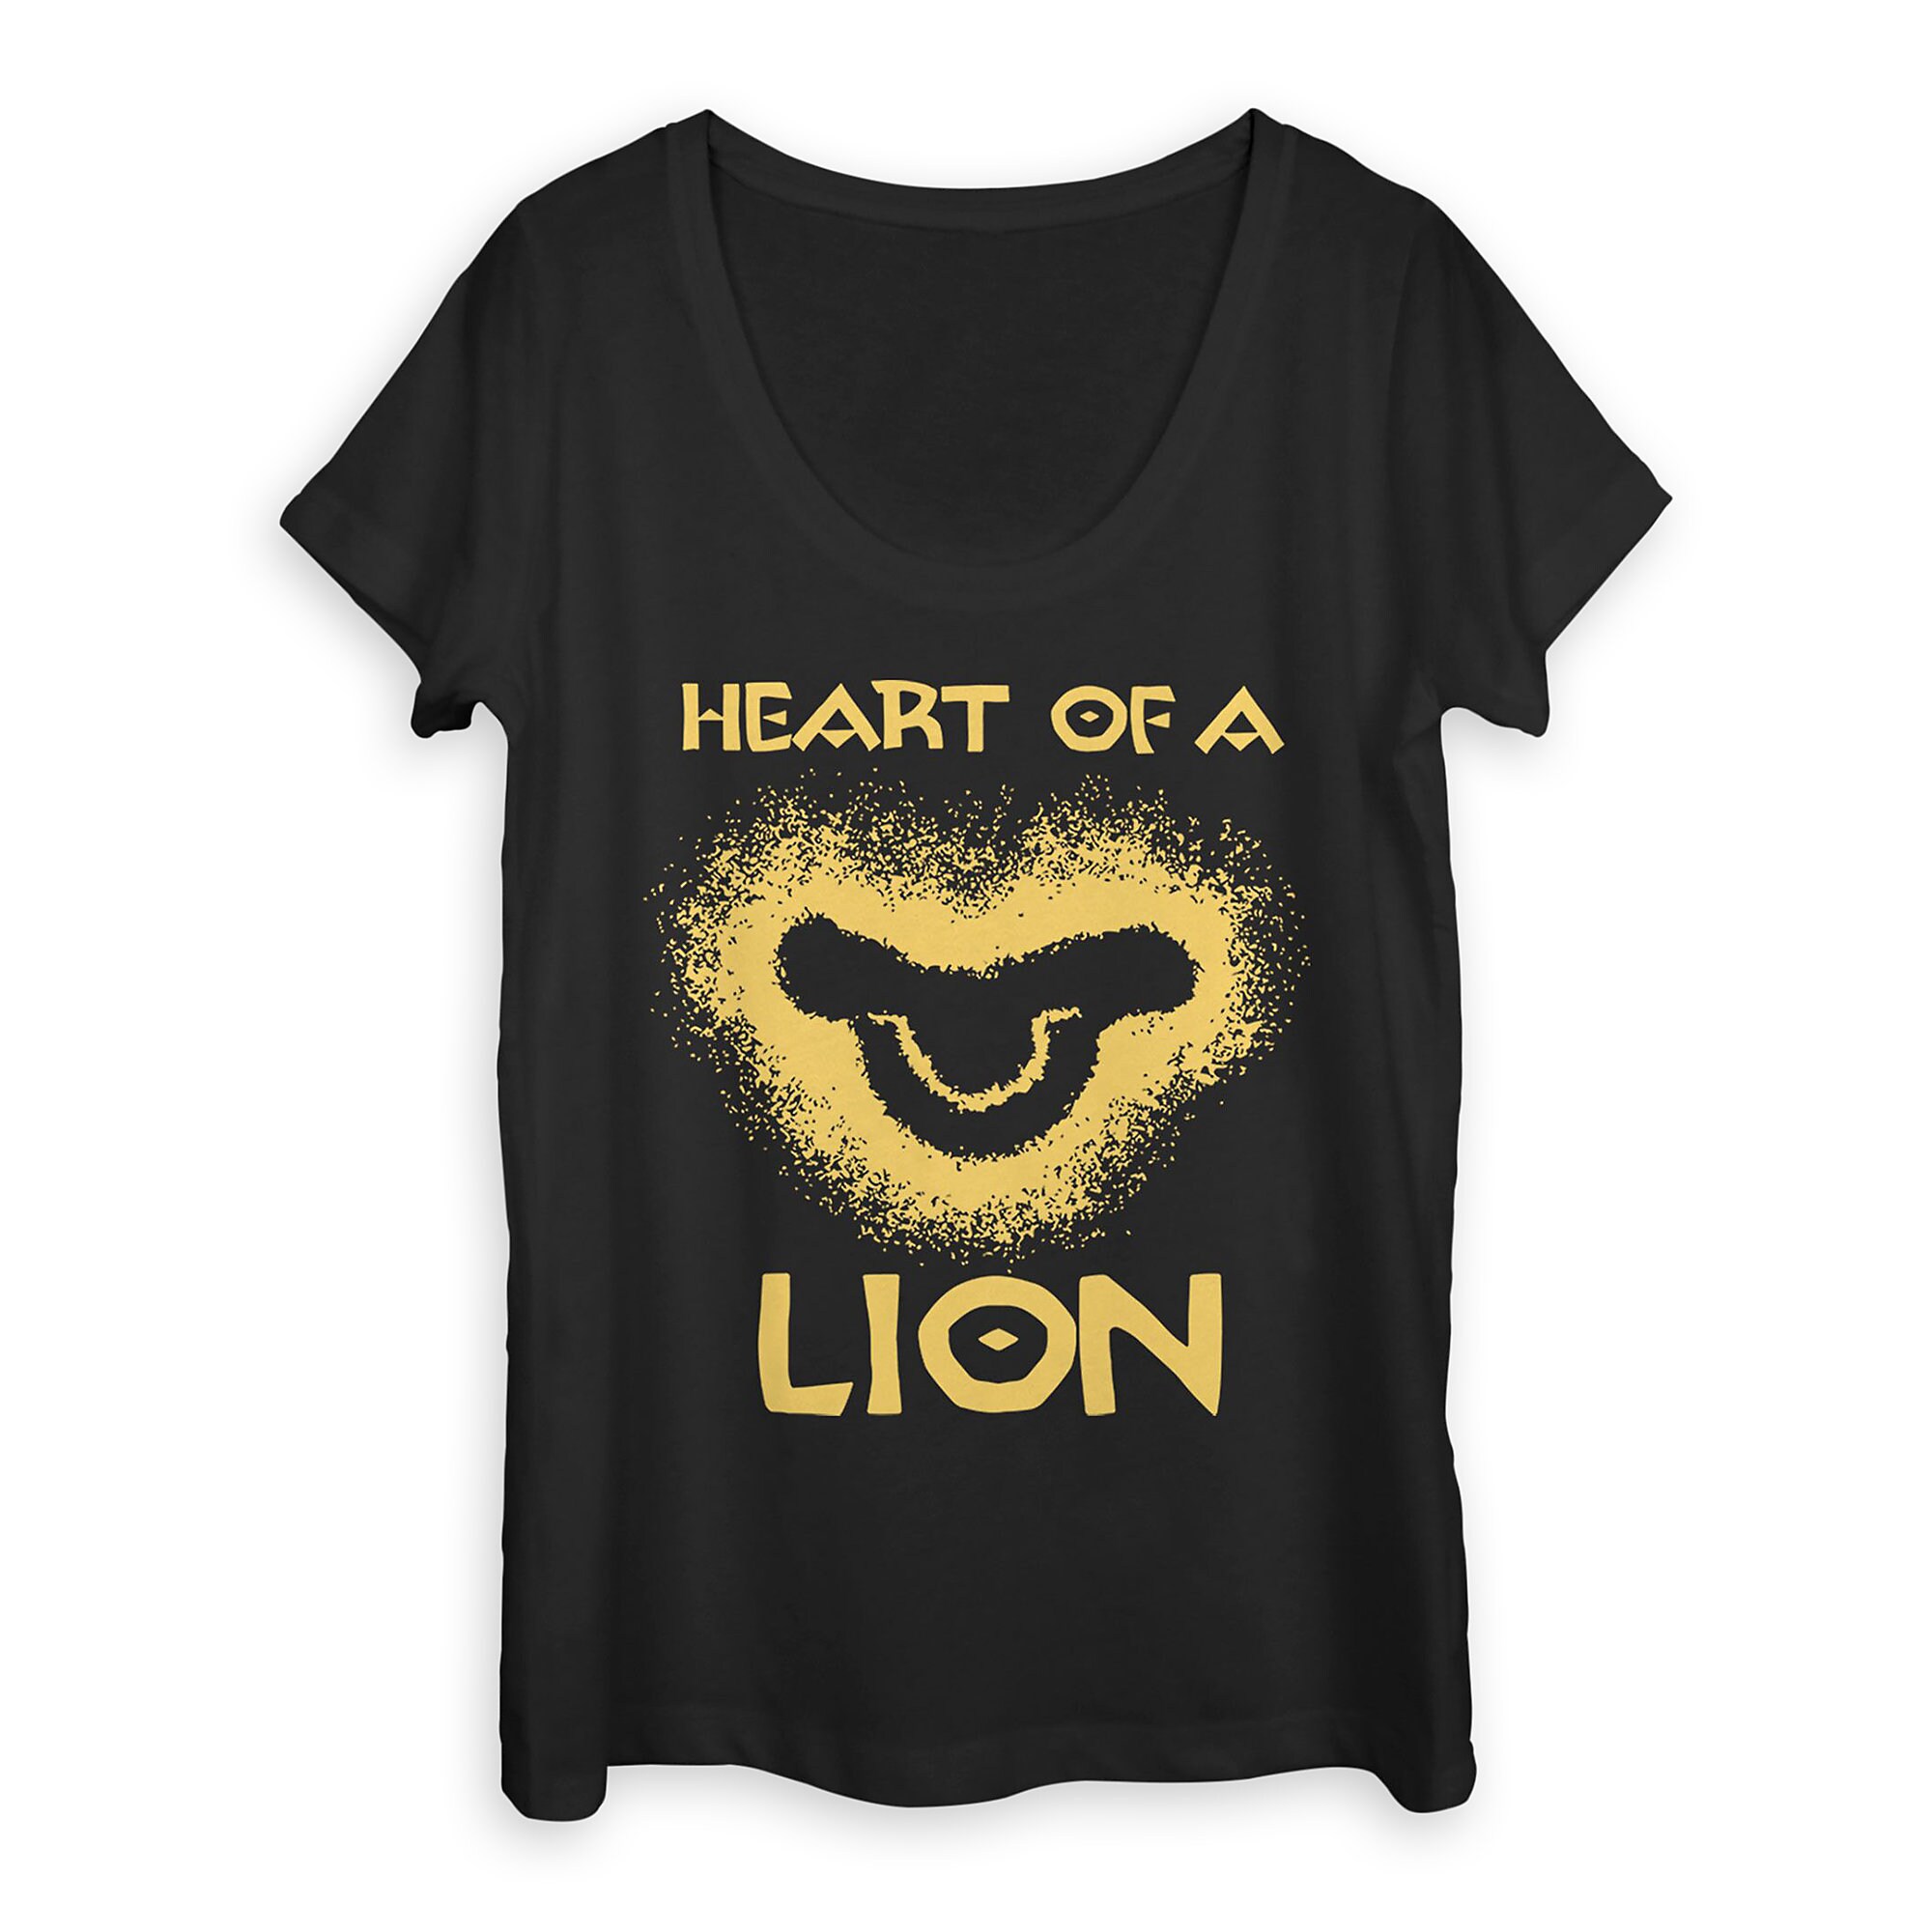 The Lion King T-Shirt for Women - 2019 Film